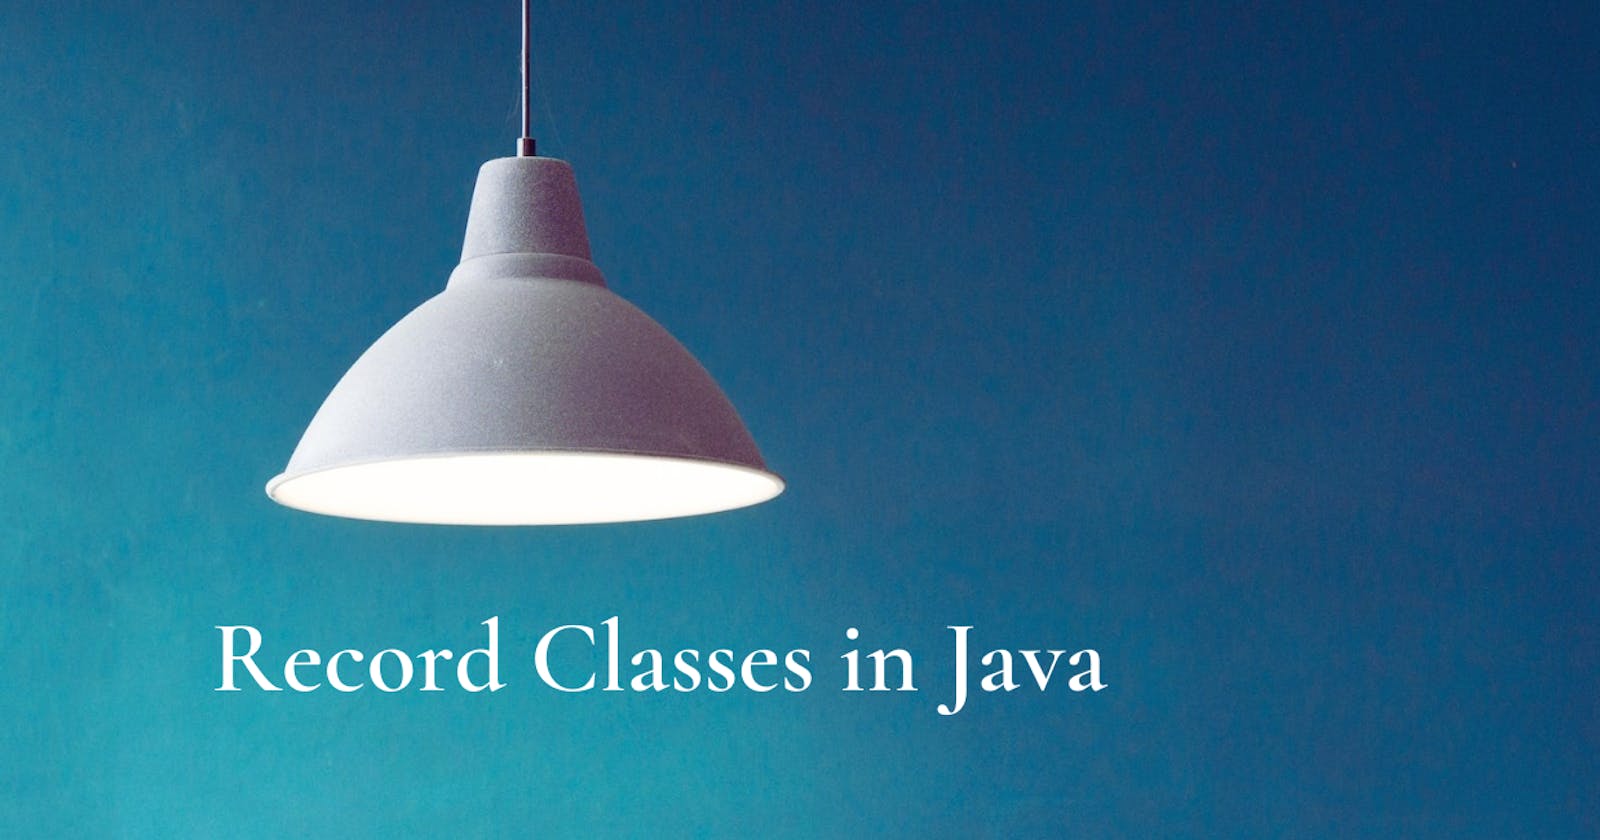 Record classes in Java